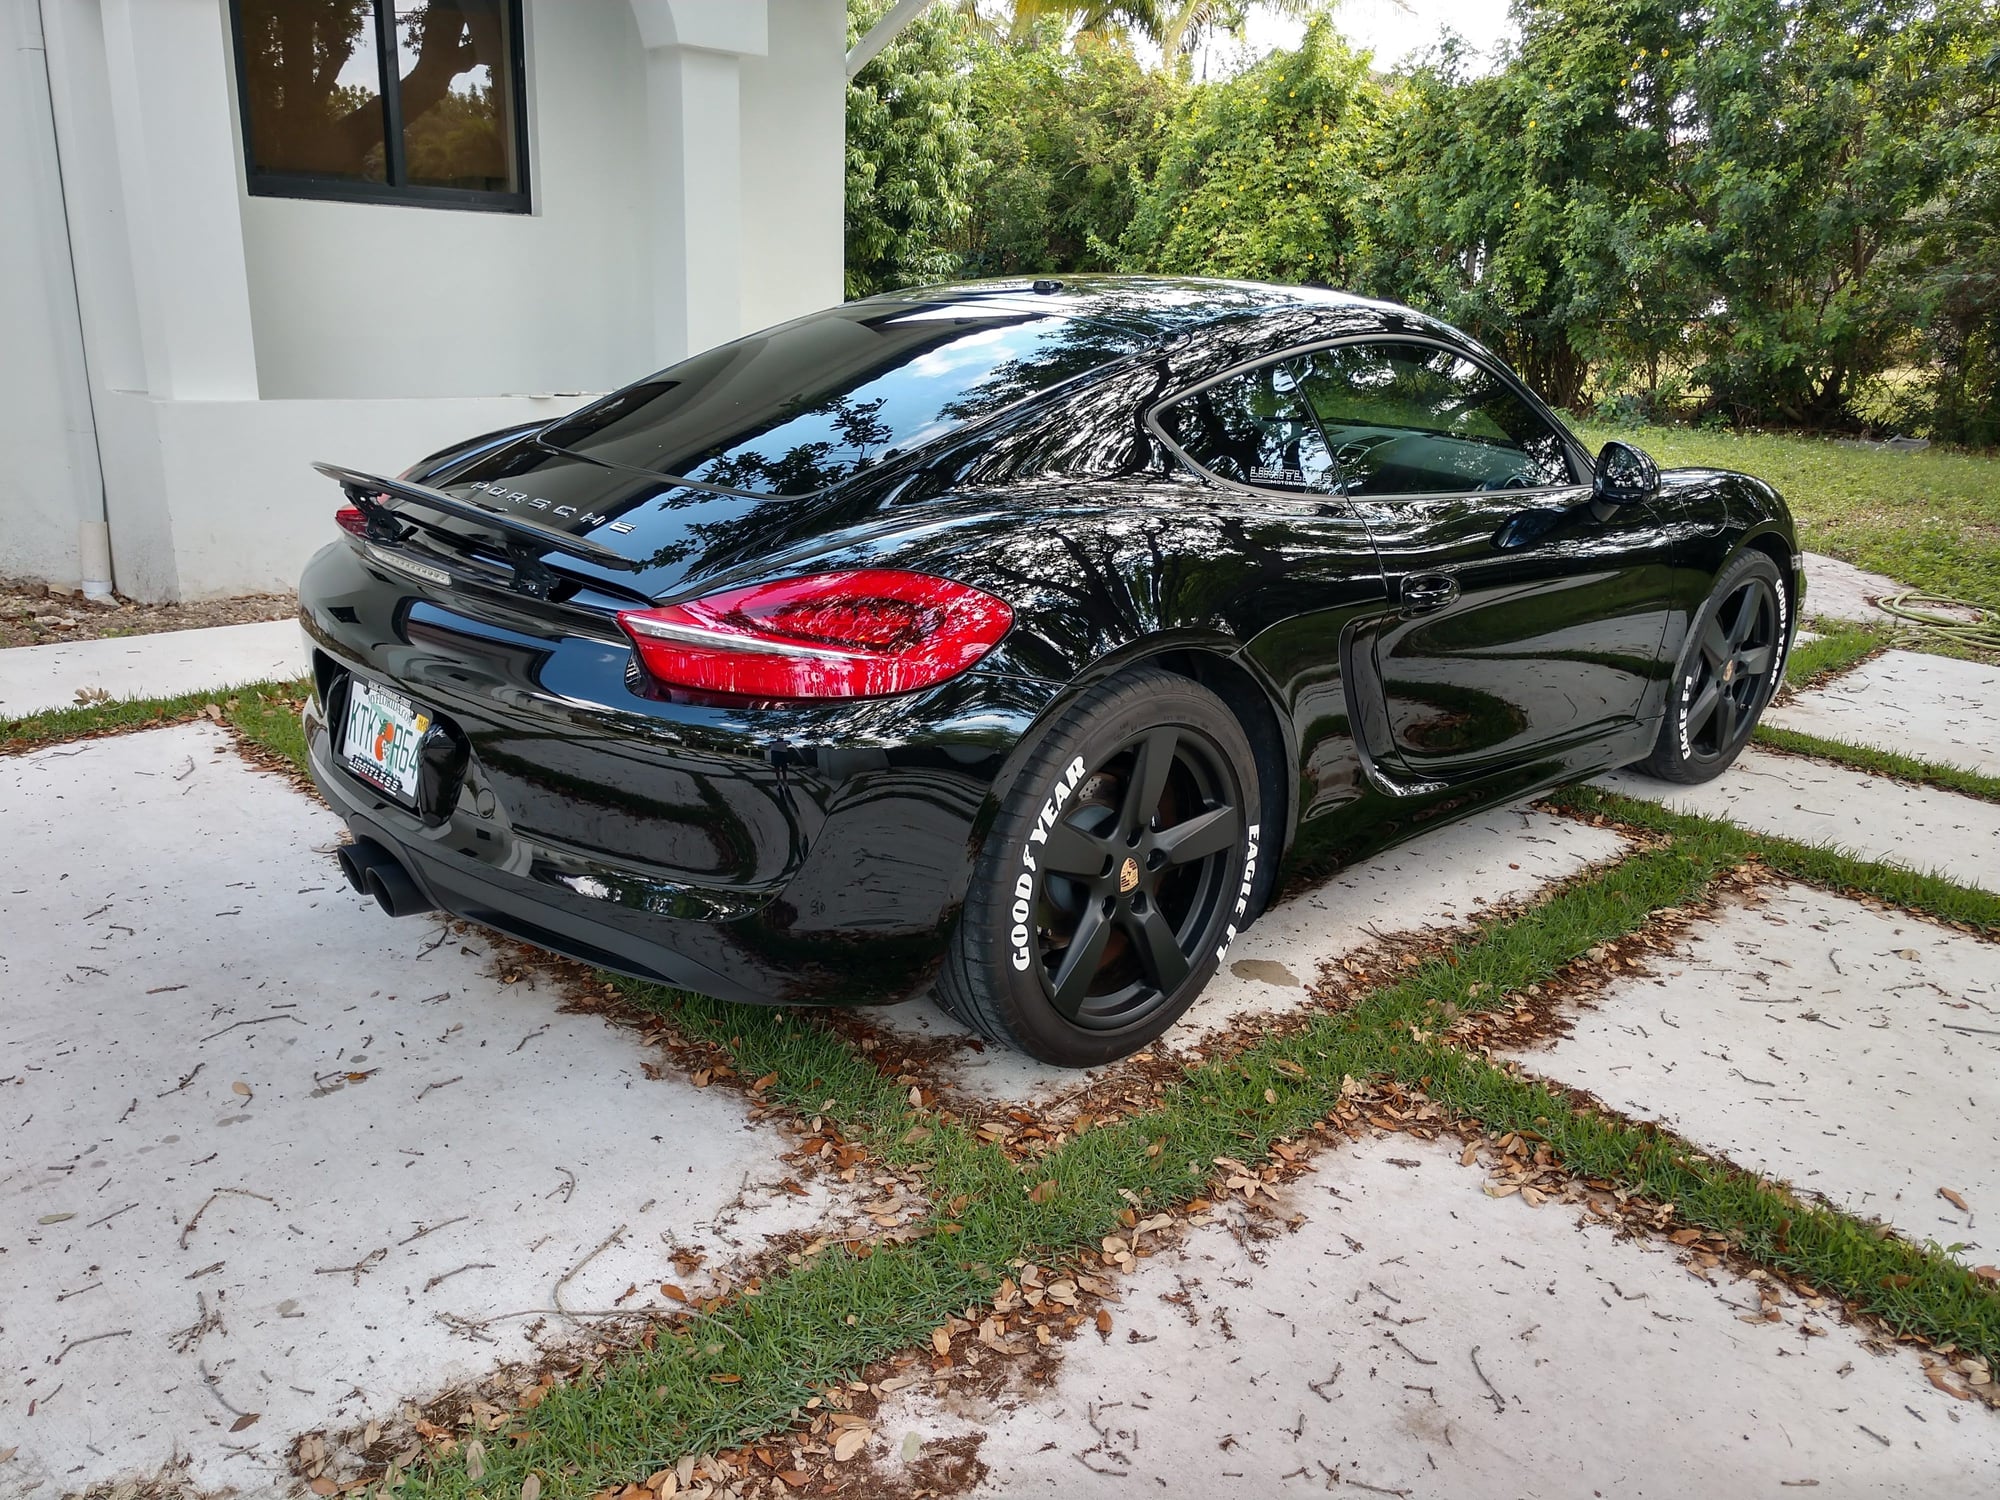 2014 Porsche Cayman - 2014 Black Porsche Cayman Base - Used - VIN WP0AA2A86EK173714 - 19,350 Miles - 6 cyl - 2WD - Manual - Coupe - Black - Miami, FL 33173, United States